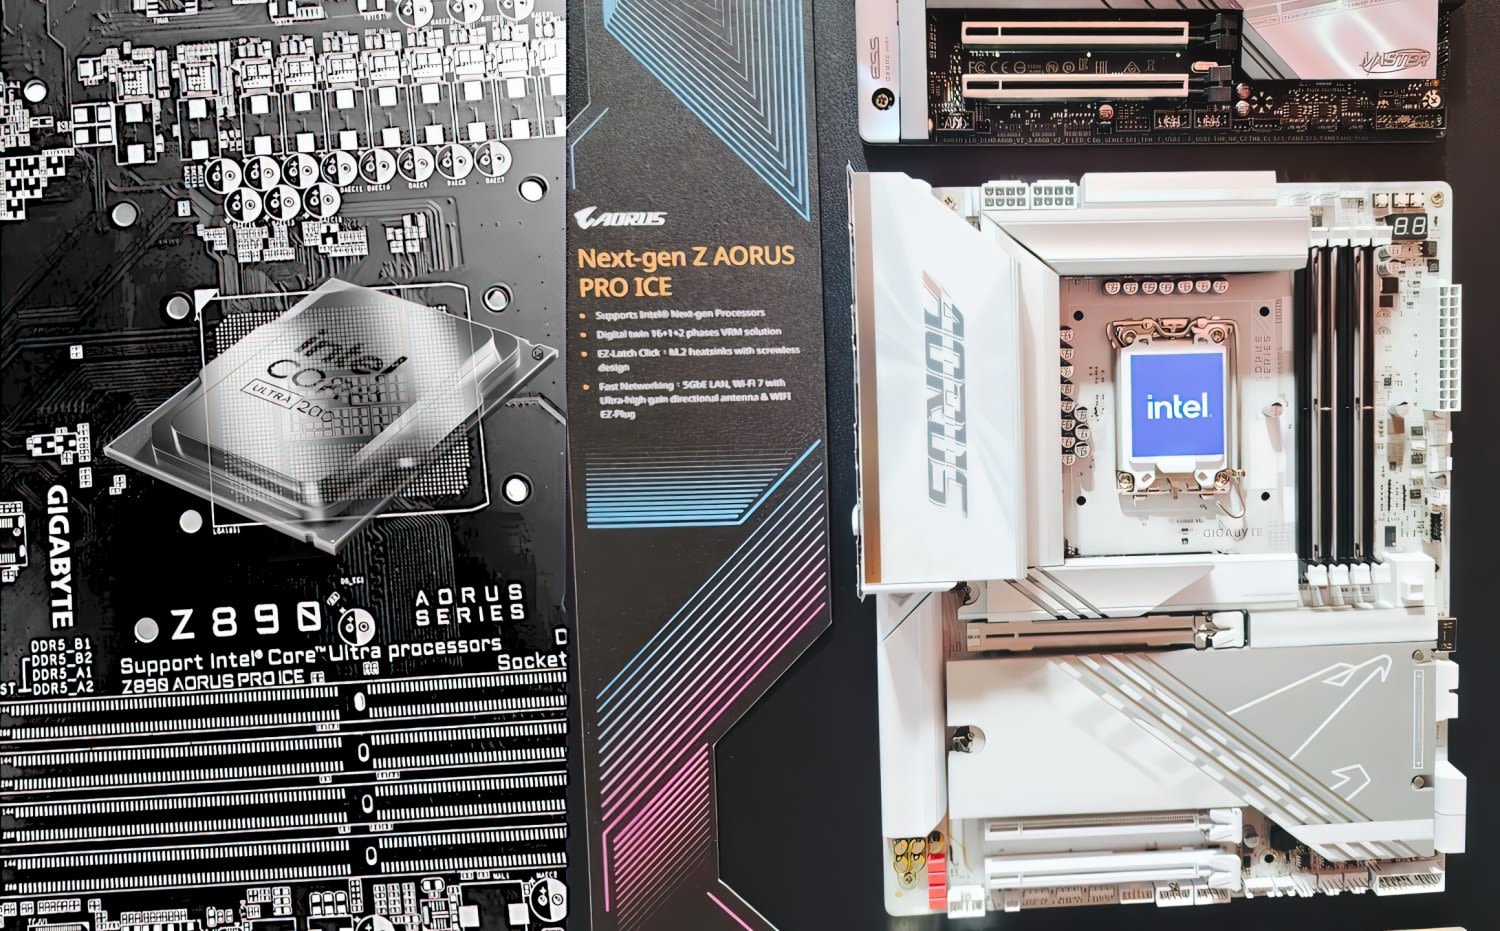 GIGABYTE mobo leak confirms Z890 chipset, Core Ultra 200 naming for Intel Arrow Lake CPUs